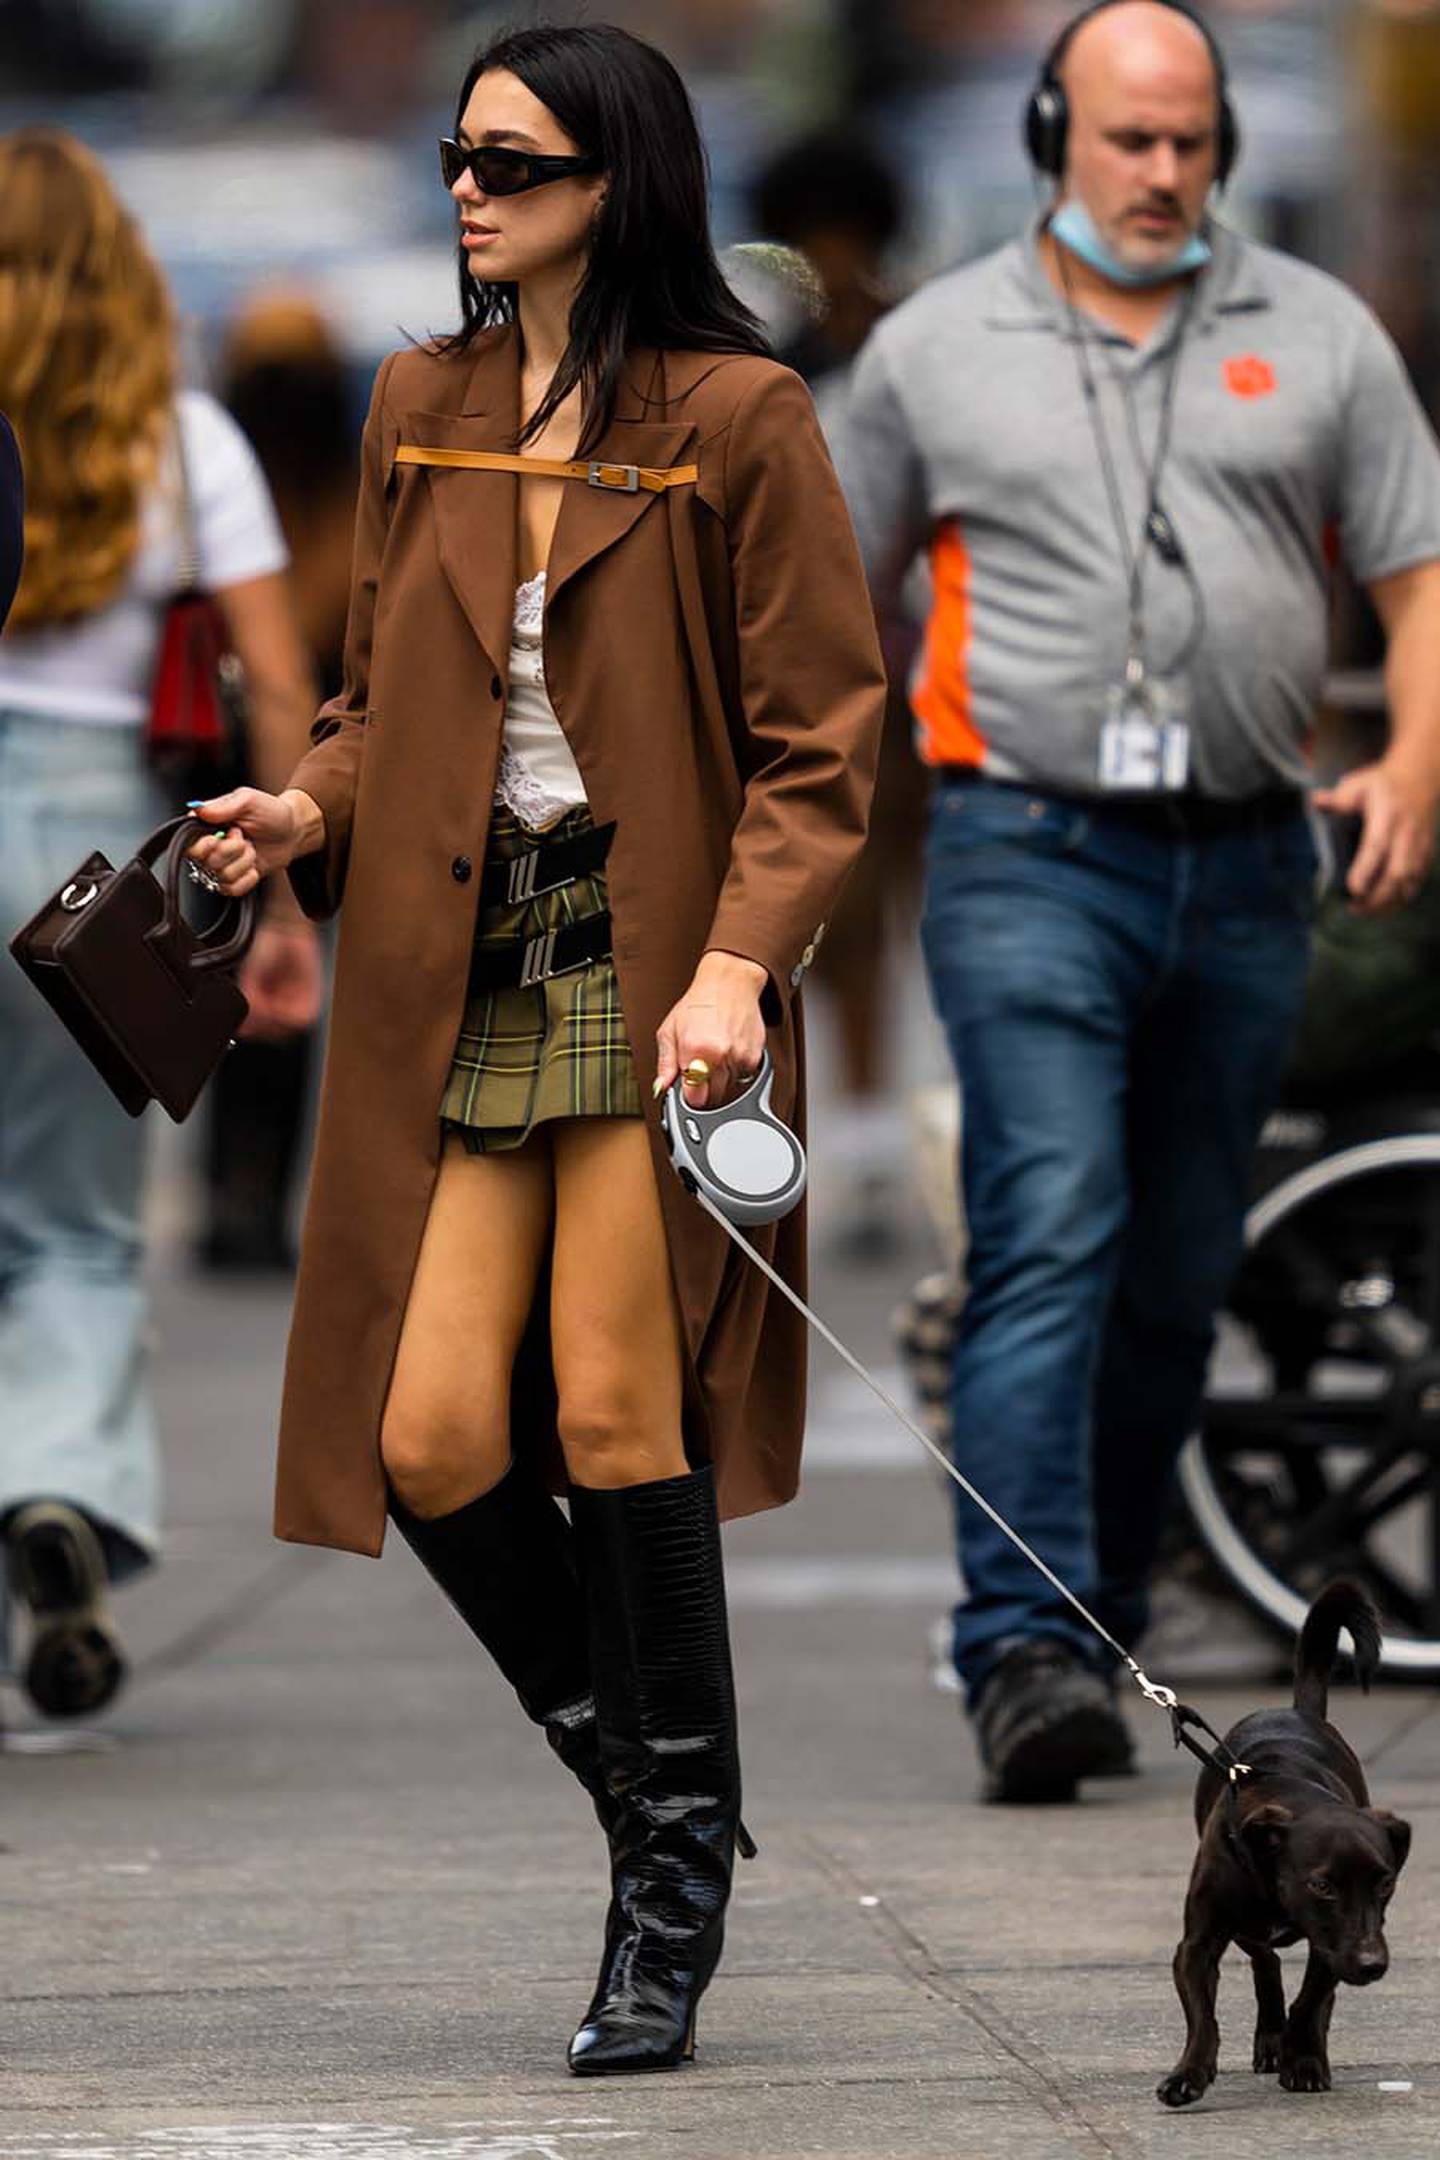 Dua Lipa walking in the street with a small dog. Wearing a long brown coat and Luar brown handbag.